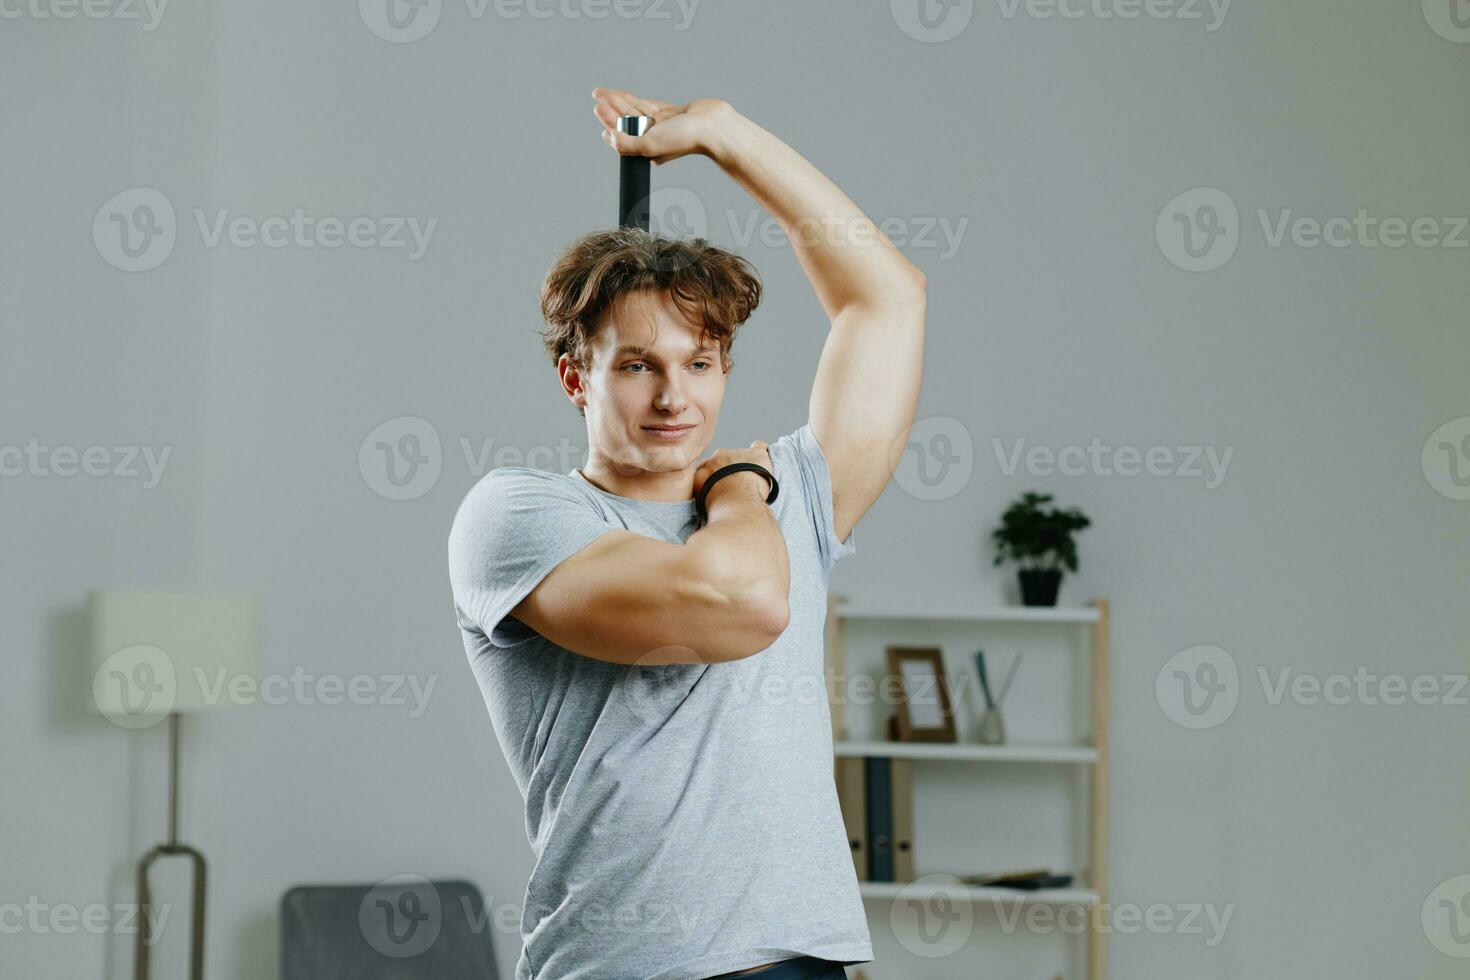 gray man training indoor sport activity strength home dumbbells health lifestyle photo